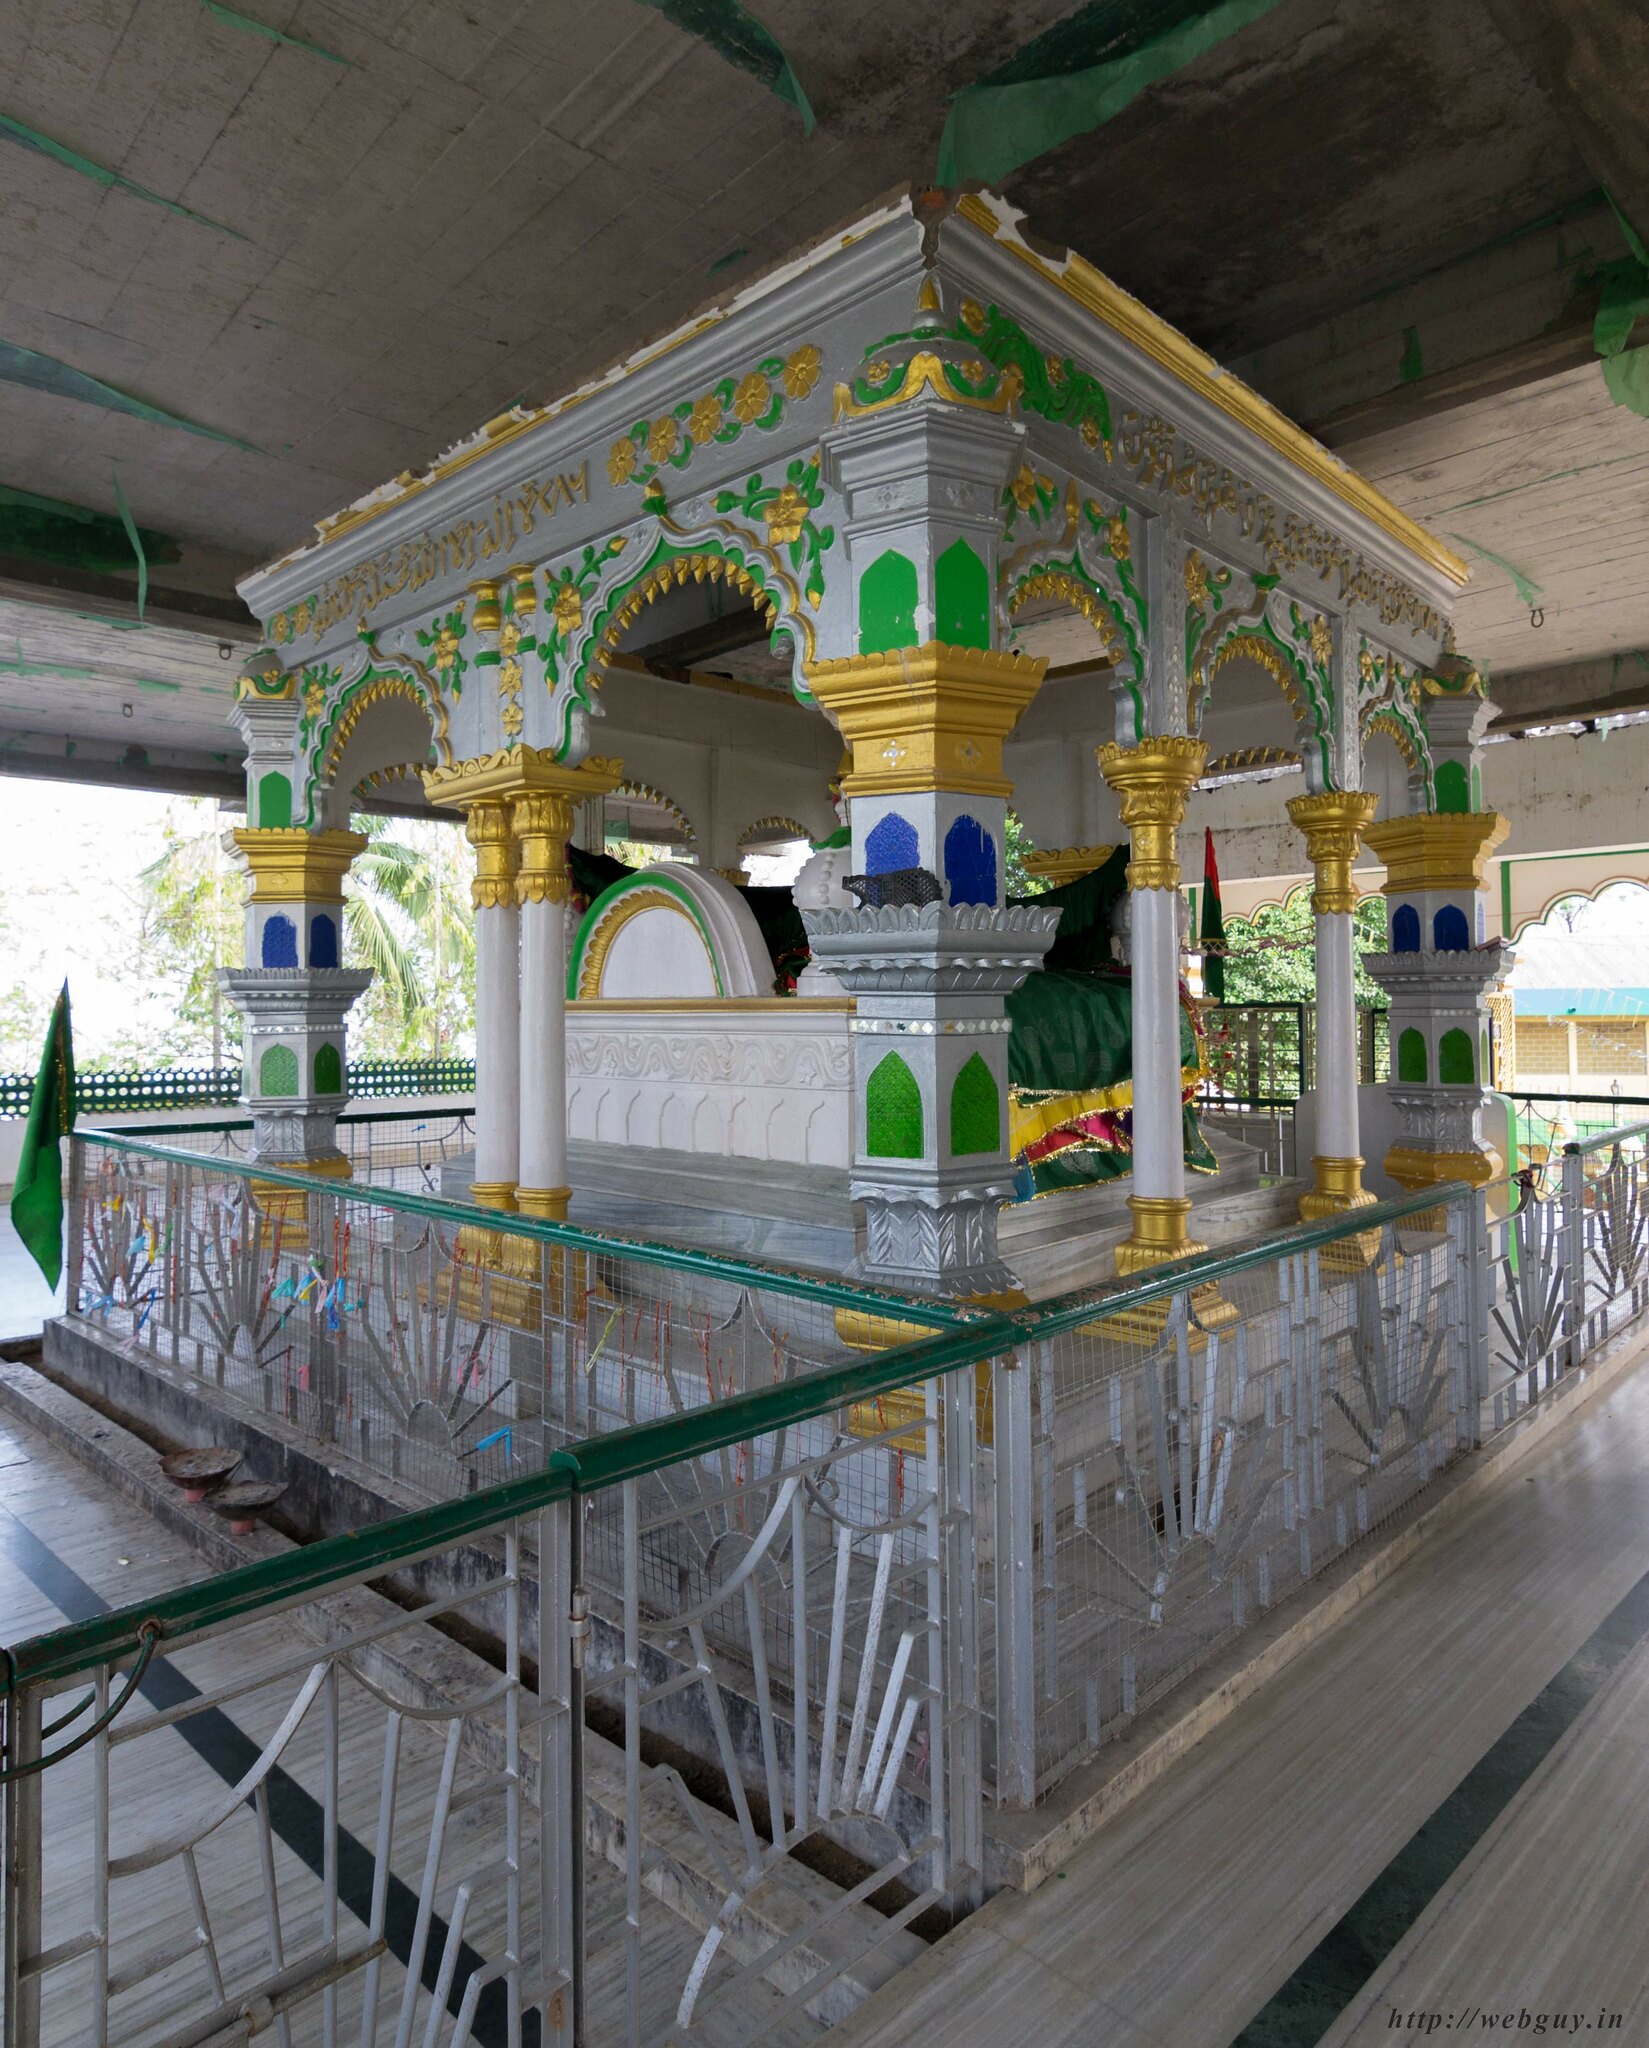 Inside The Mosque, Poa Mecca - Hajo